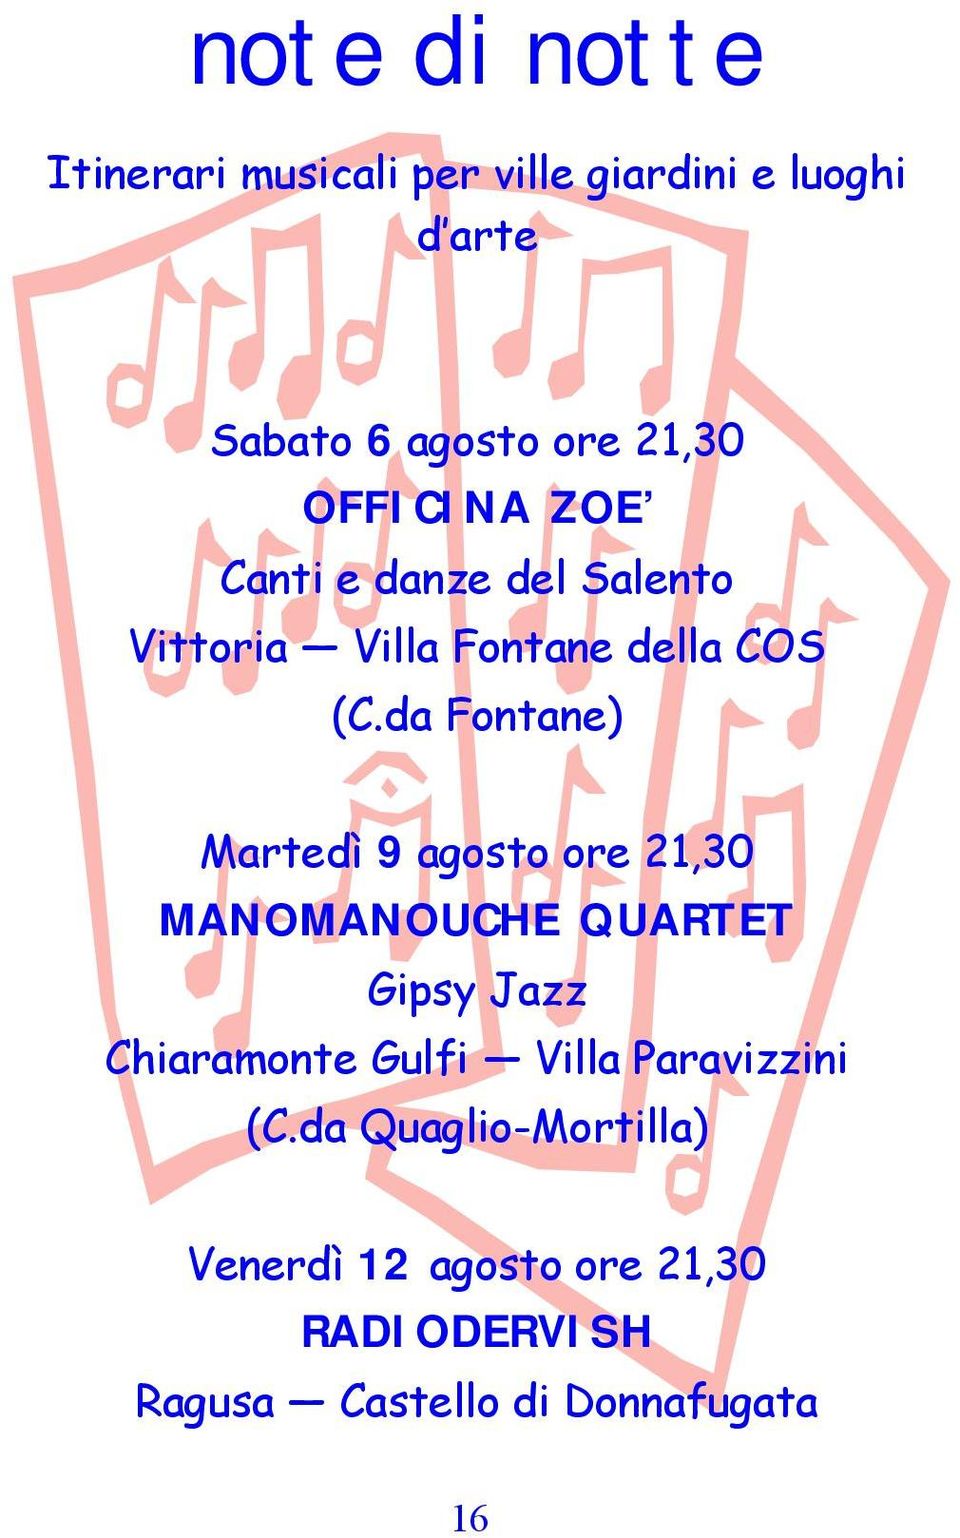 da Fontane) Martedì 9 agosto ore 21,30 MANOMANOUCHE QUARTET Gipsy Jazz Chiaramonte Gulfi